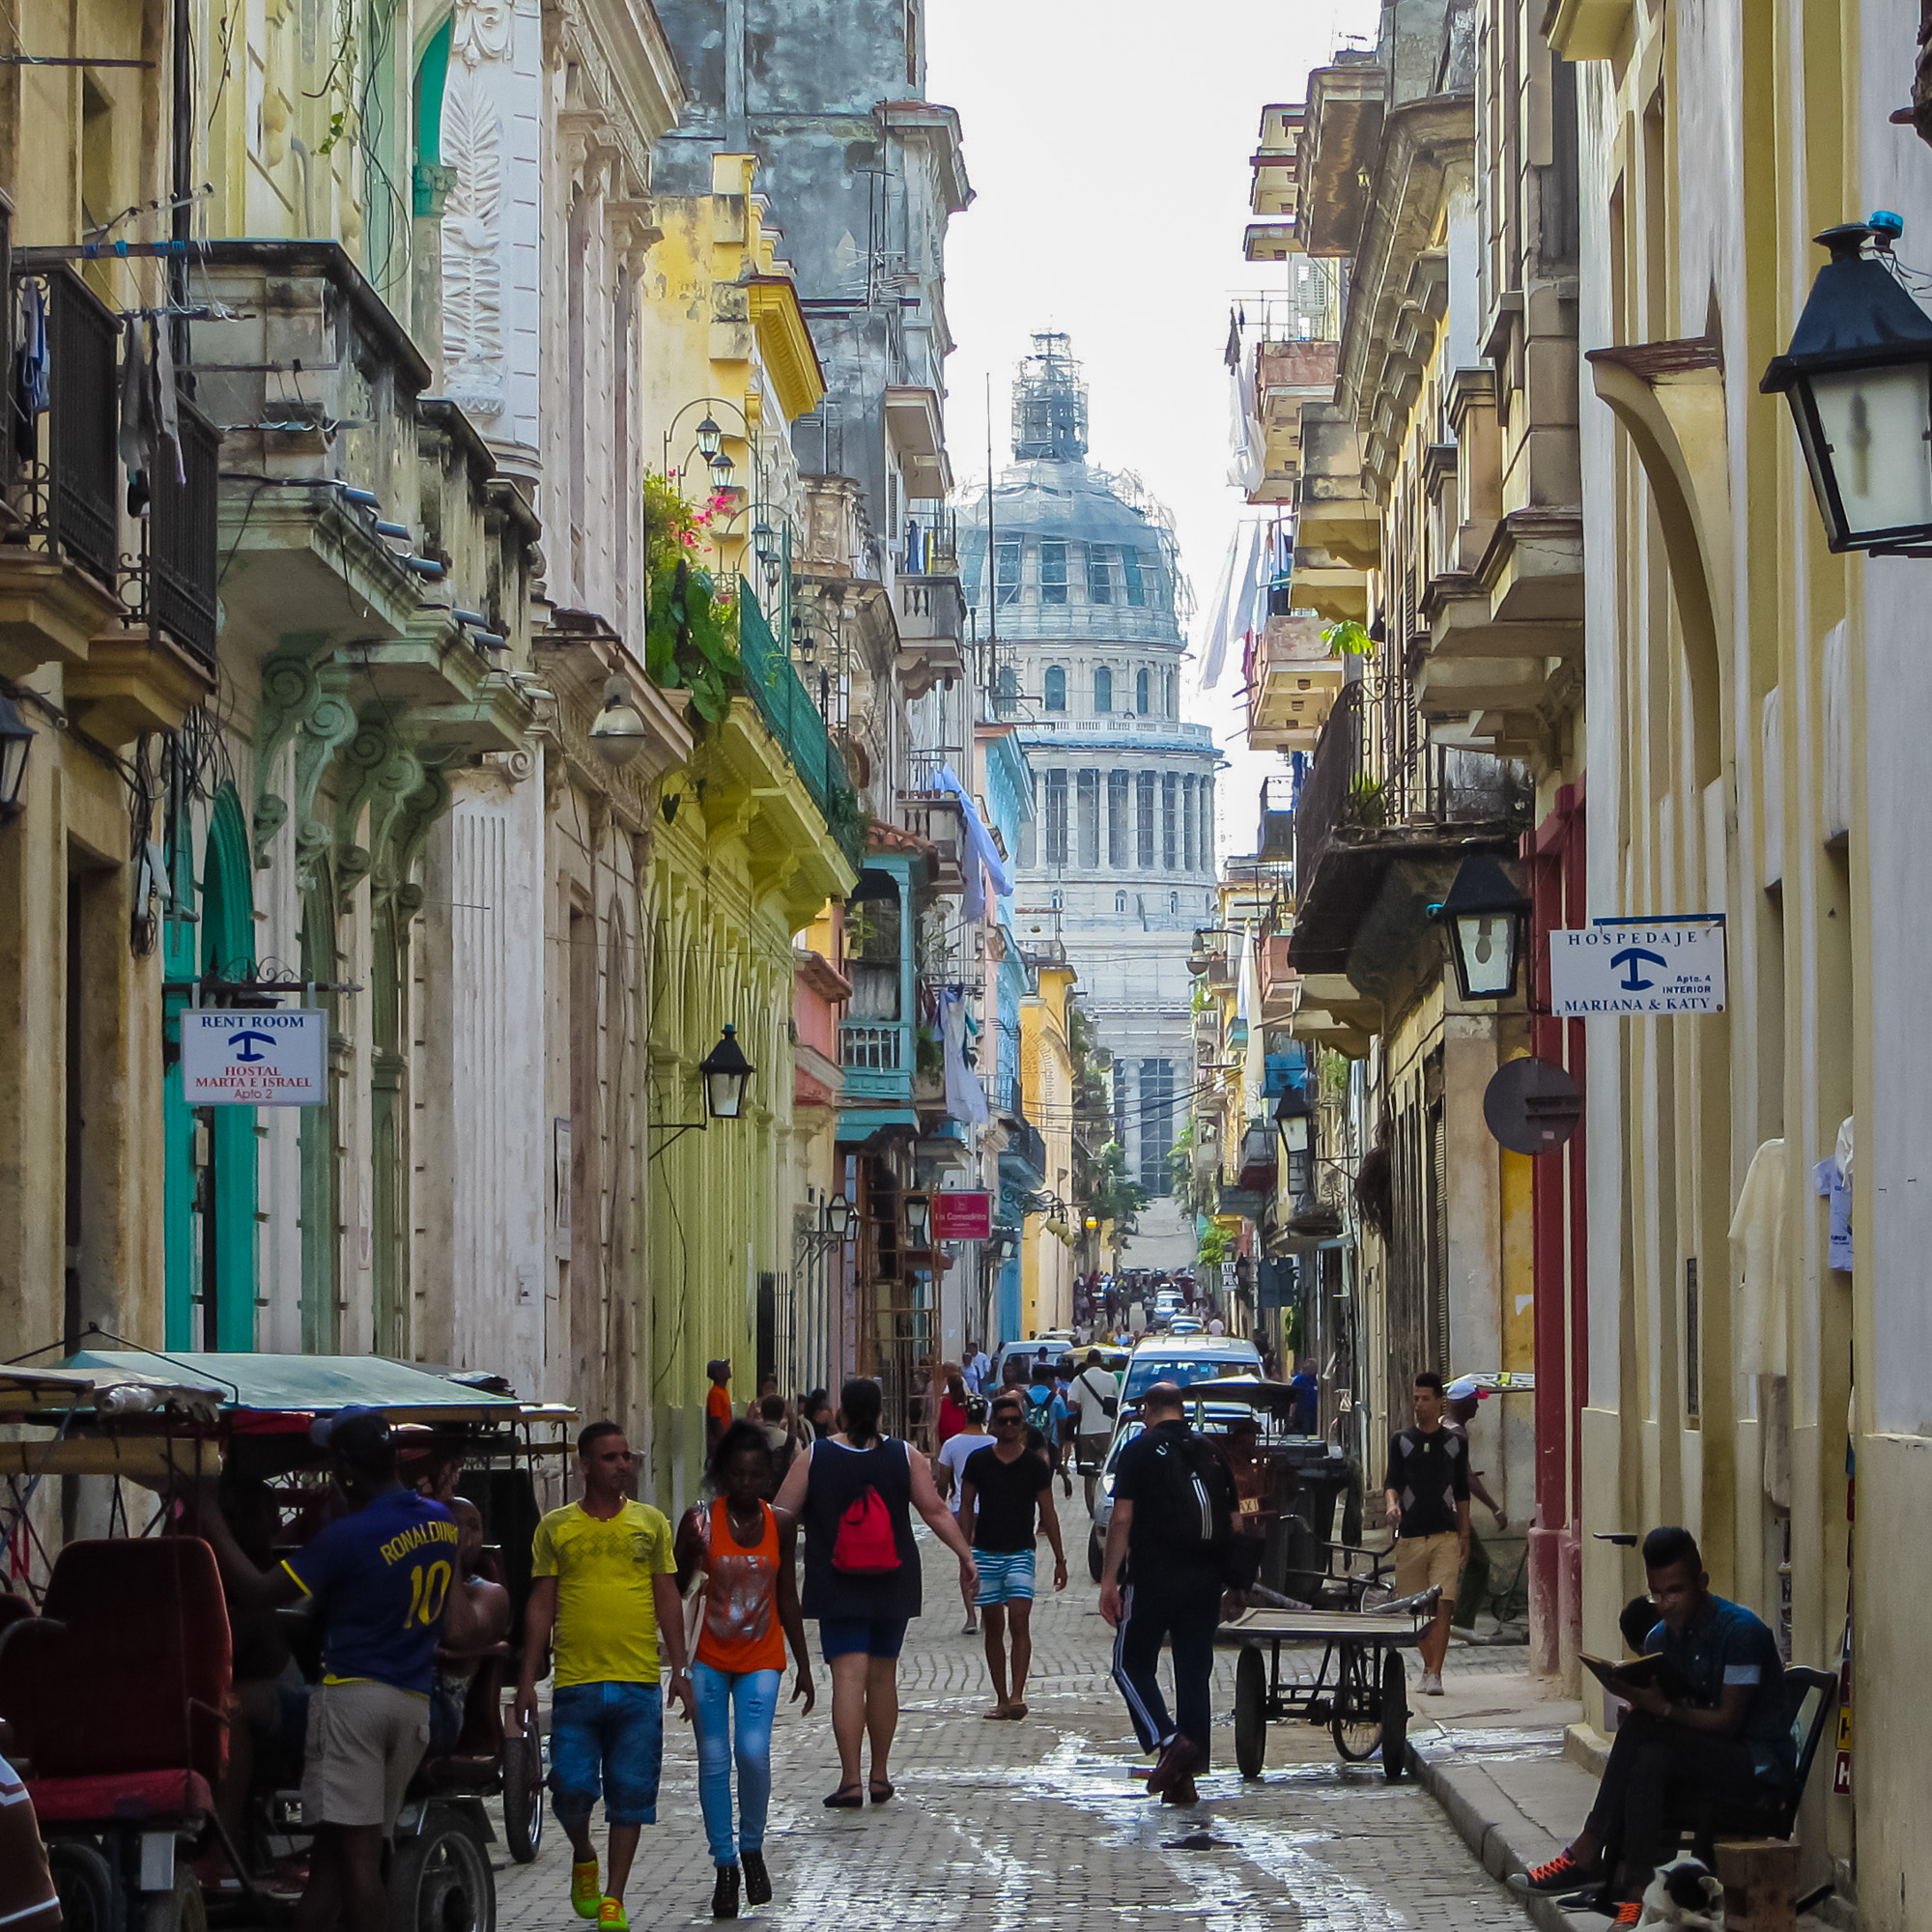 The Havana Capitol